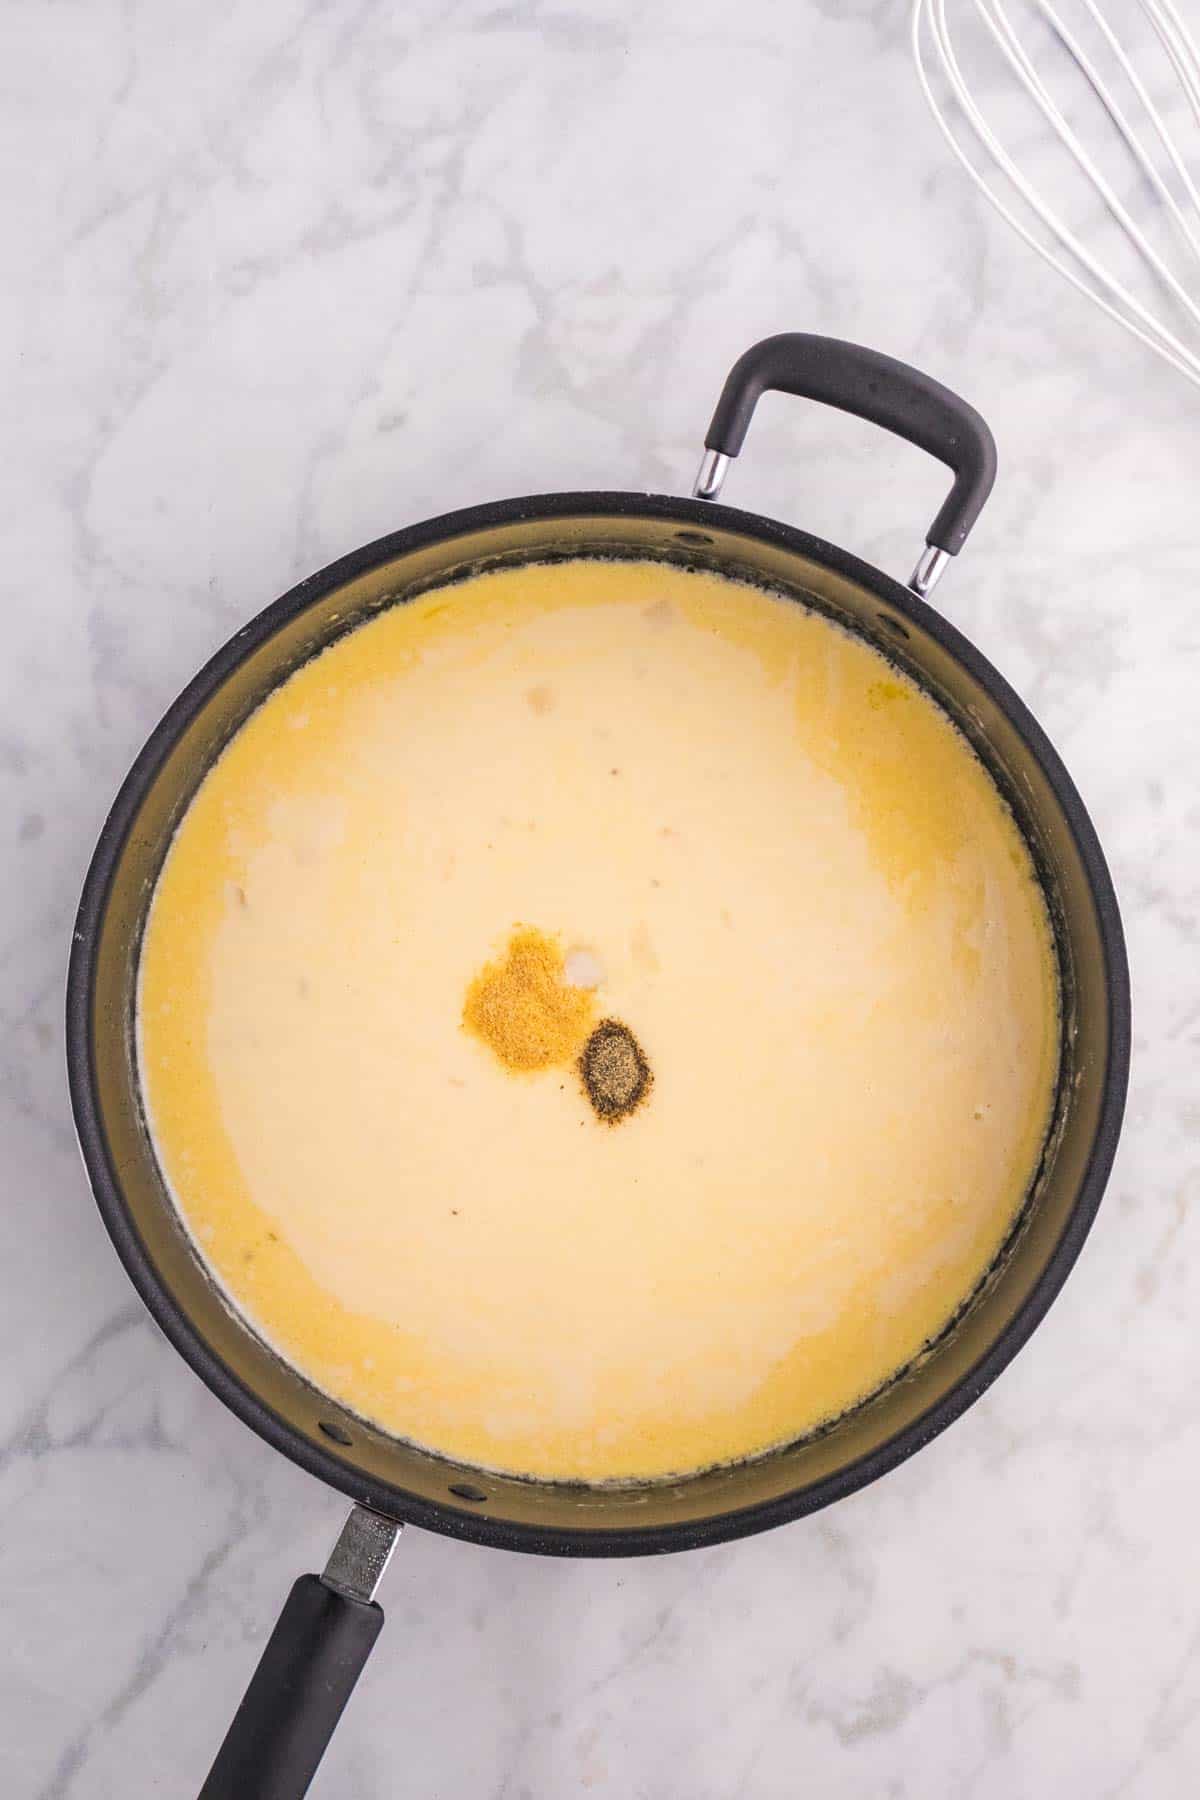 salt, pepper and garlic powder added to cream sauce in a saucepan